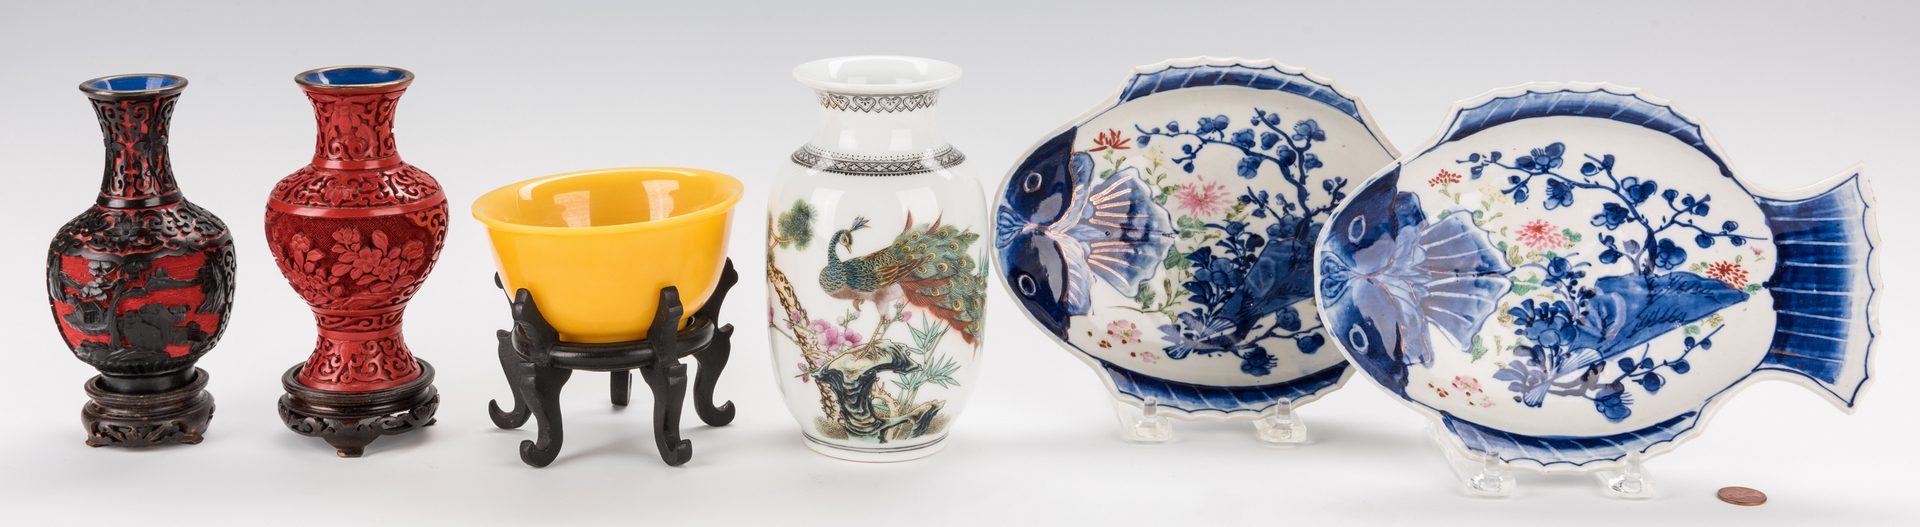 Lot 190: 6 Asian Decorative Table Items